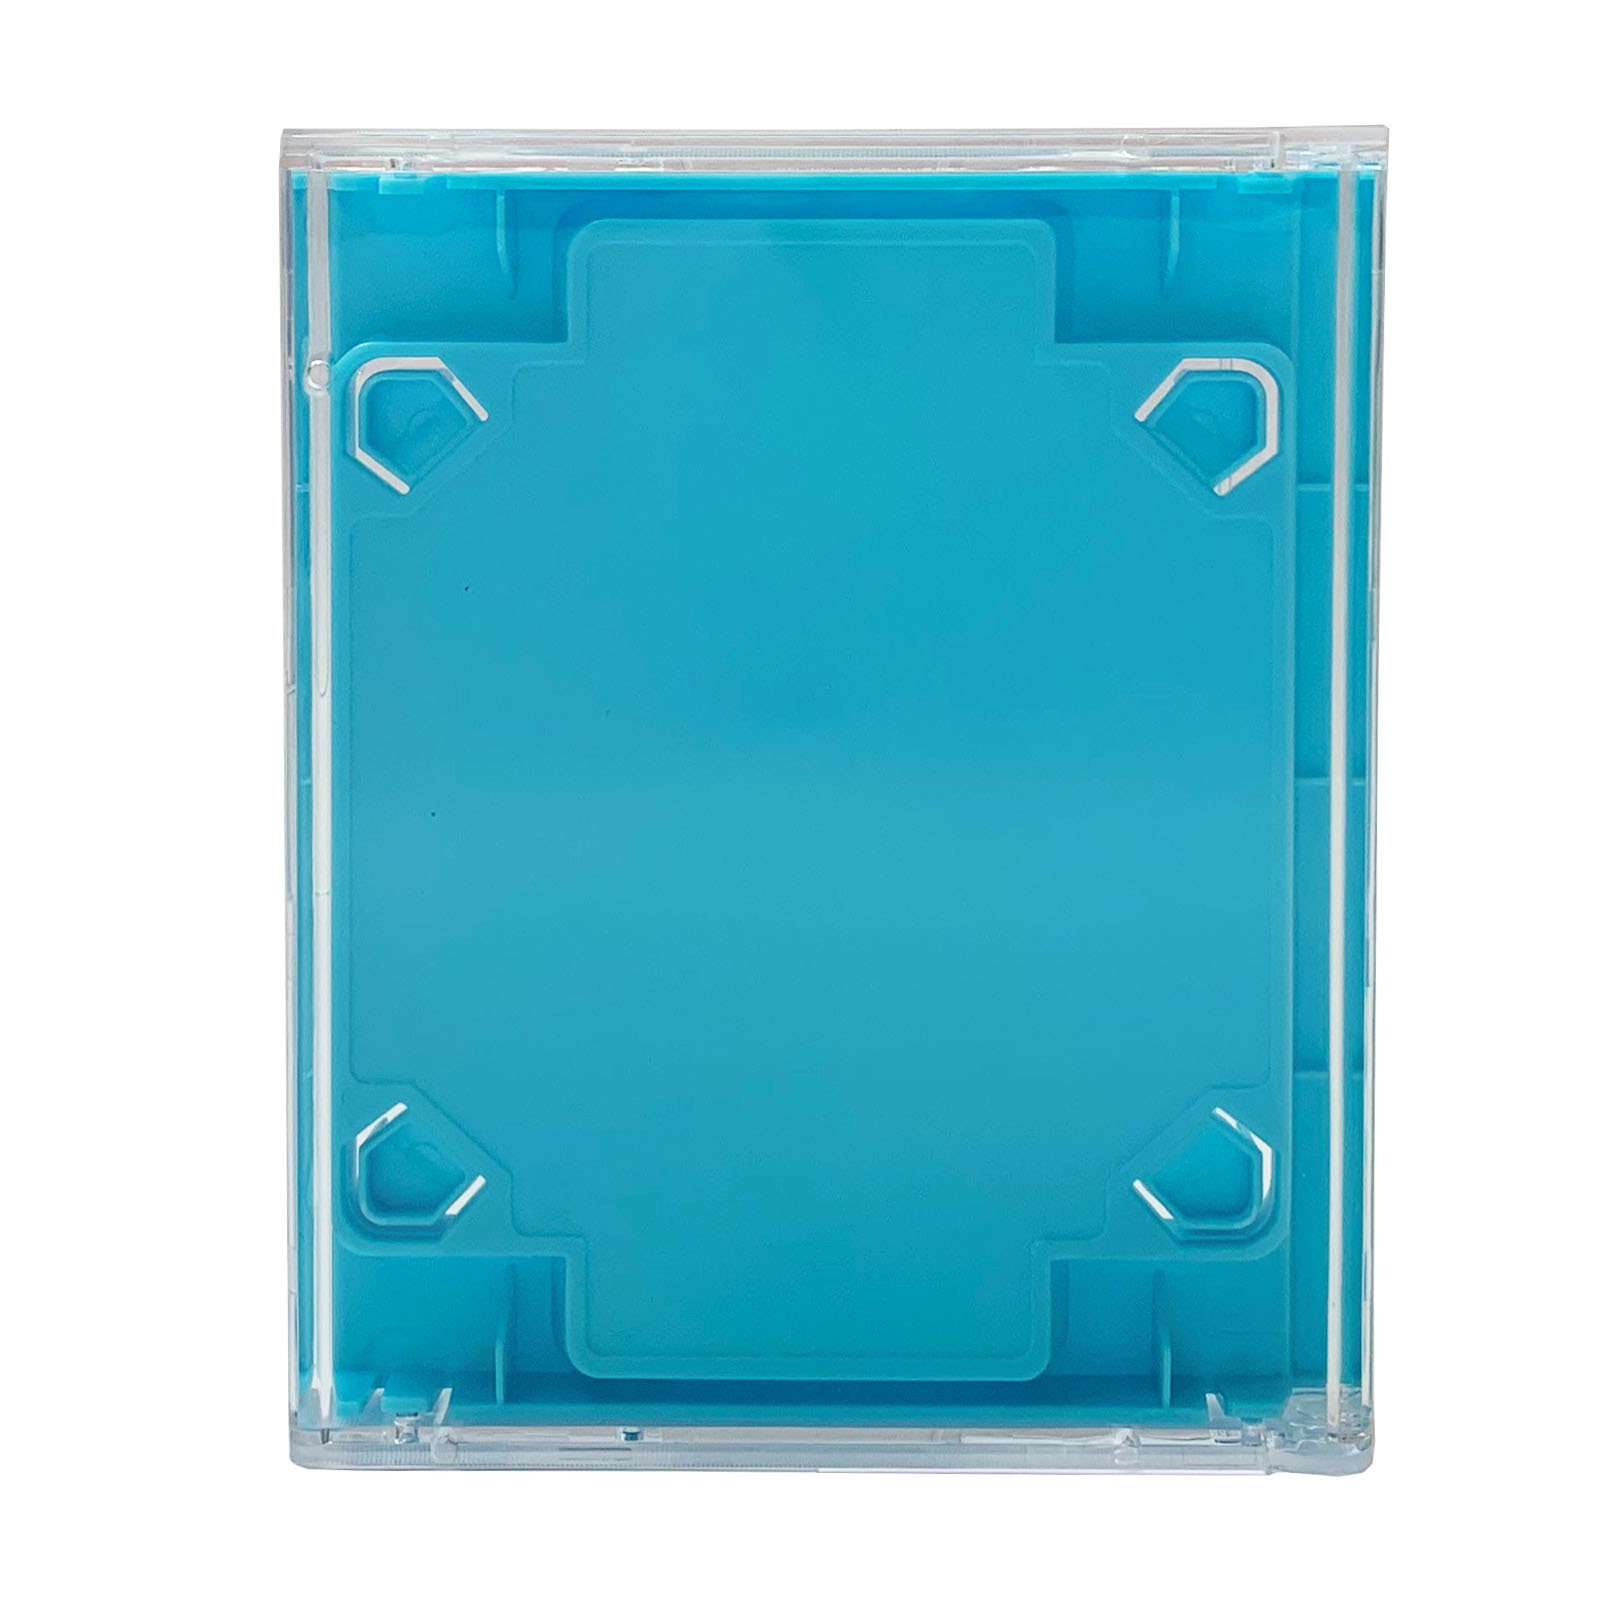 Full size MiniDisc case with a light blue inner tray - Retro Style Media